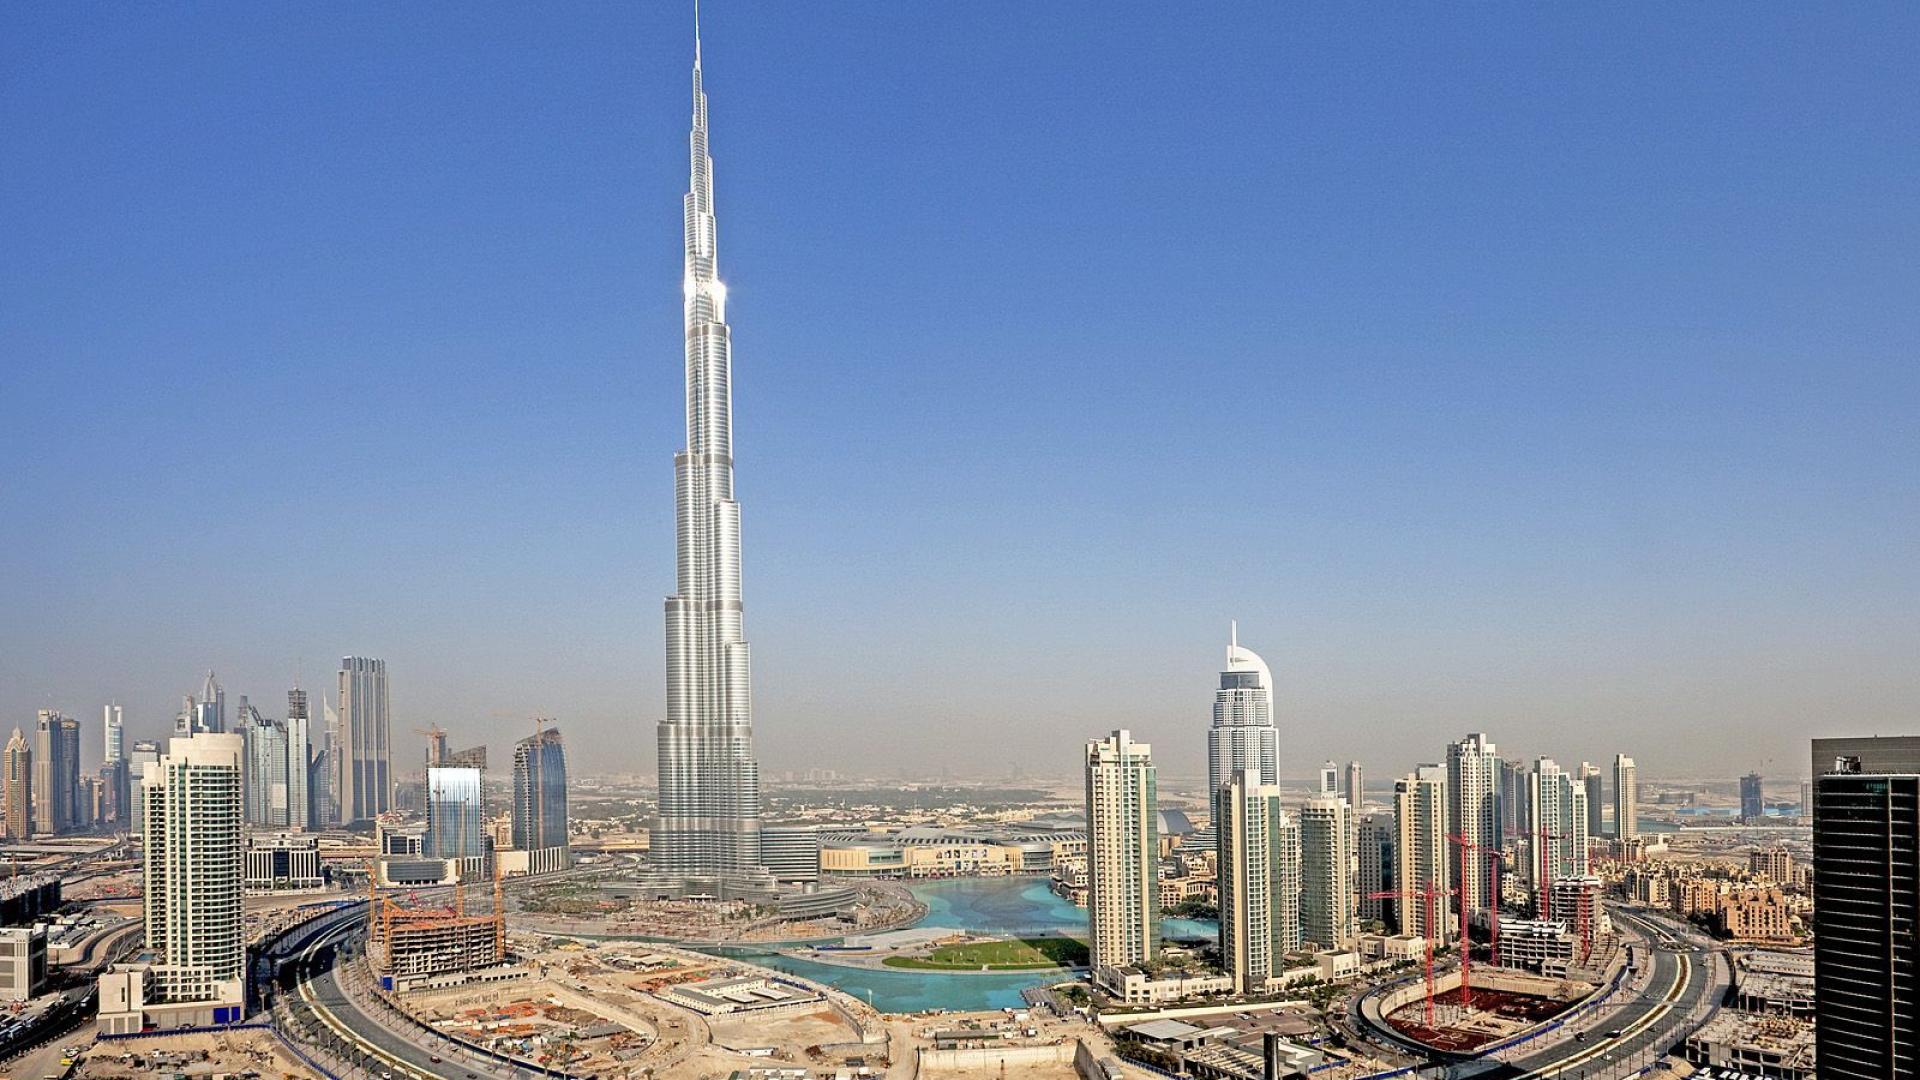 Fountains at Dubai and Burj Khalifa, the tallest building-Desktop  backgrounds-2560x1600 : Wallpapers13.com